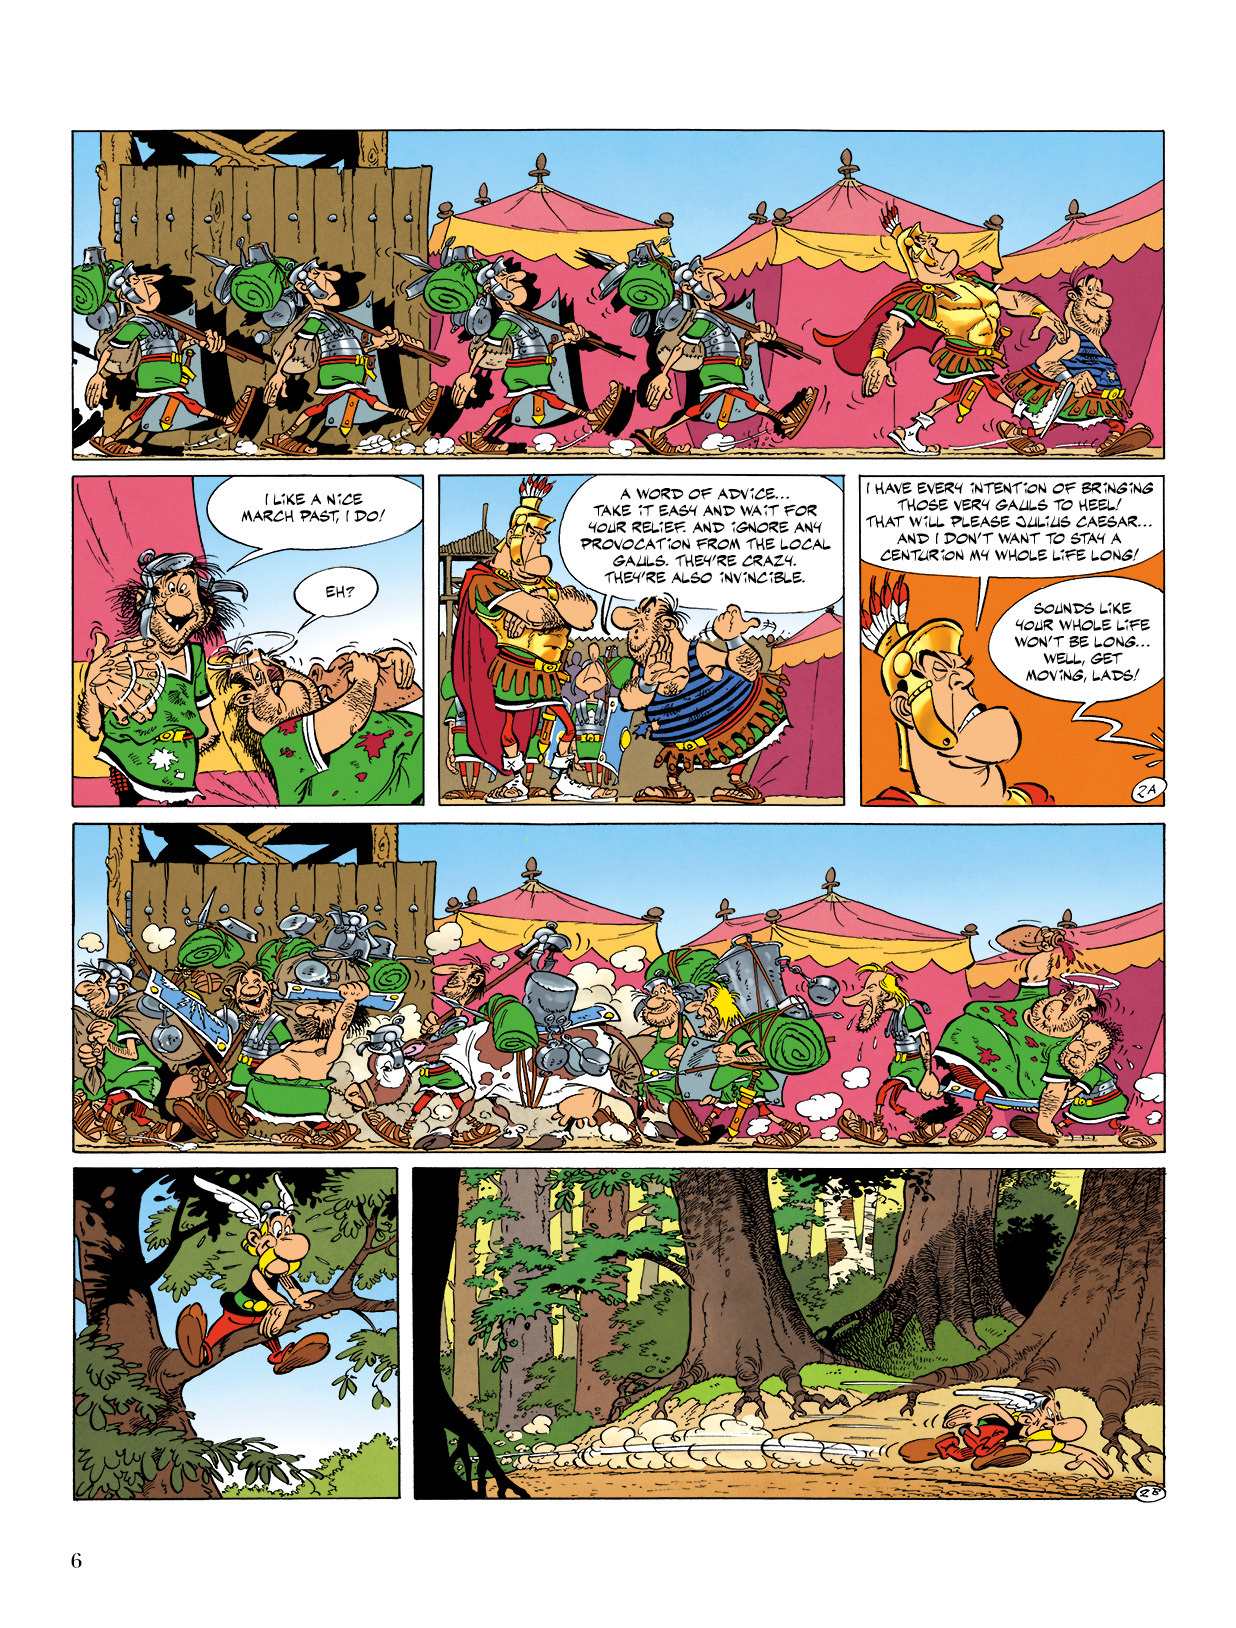 Geneeskunde Peer helikopter Read Comics Online Free - Asterix Comic Book Issue #023 - Page 7